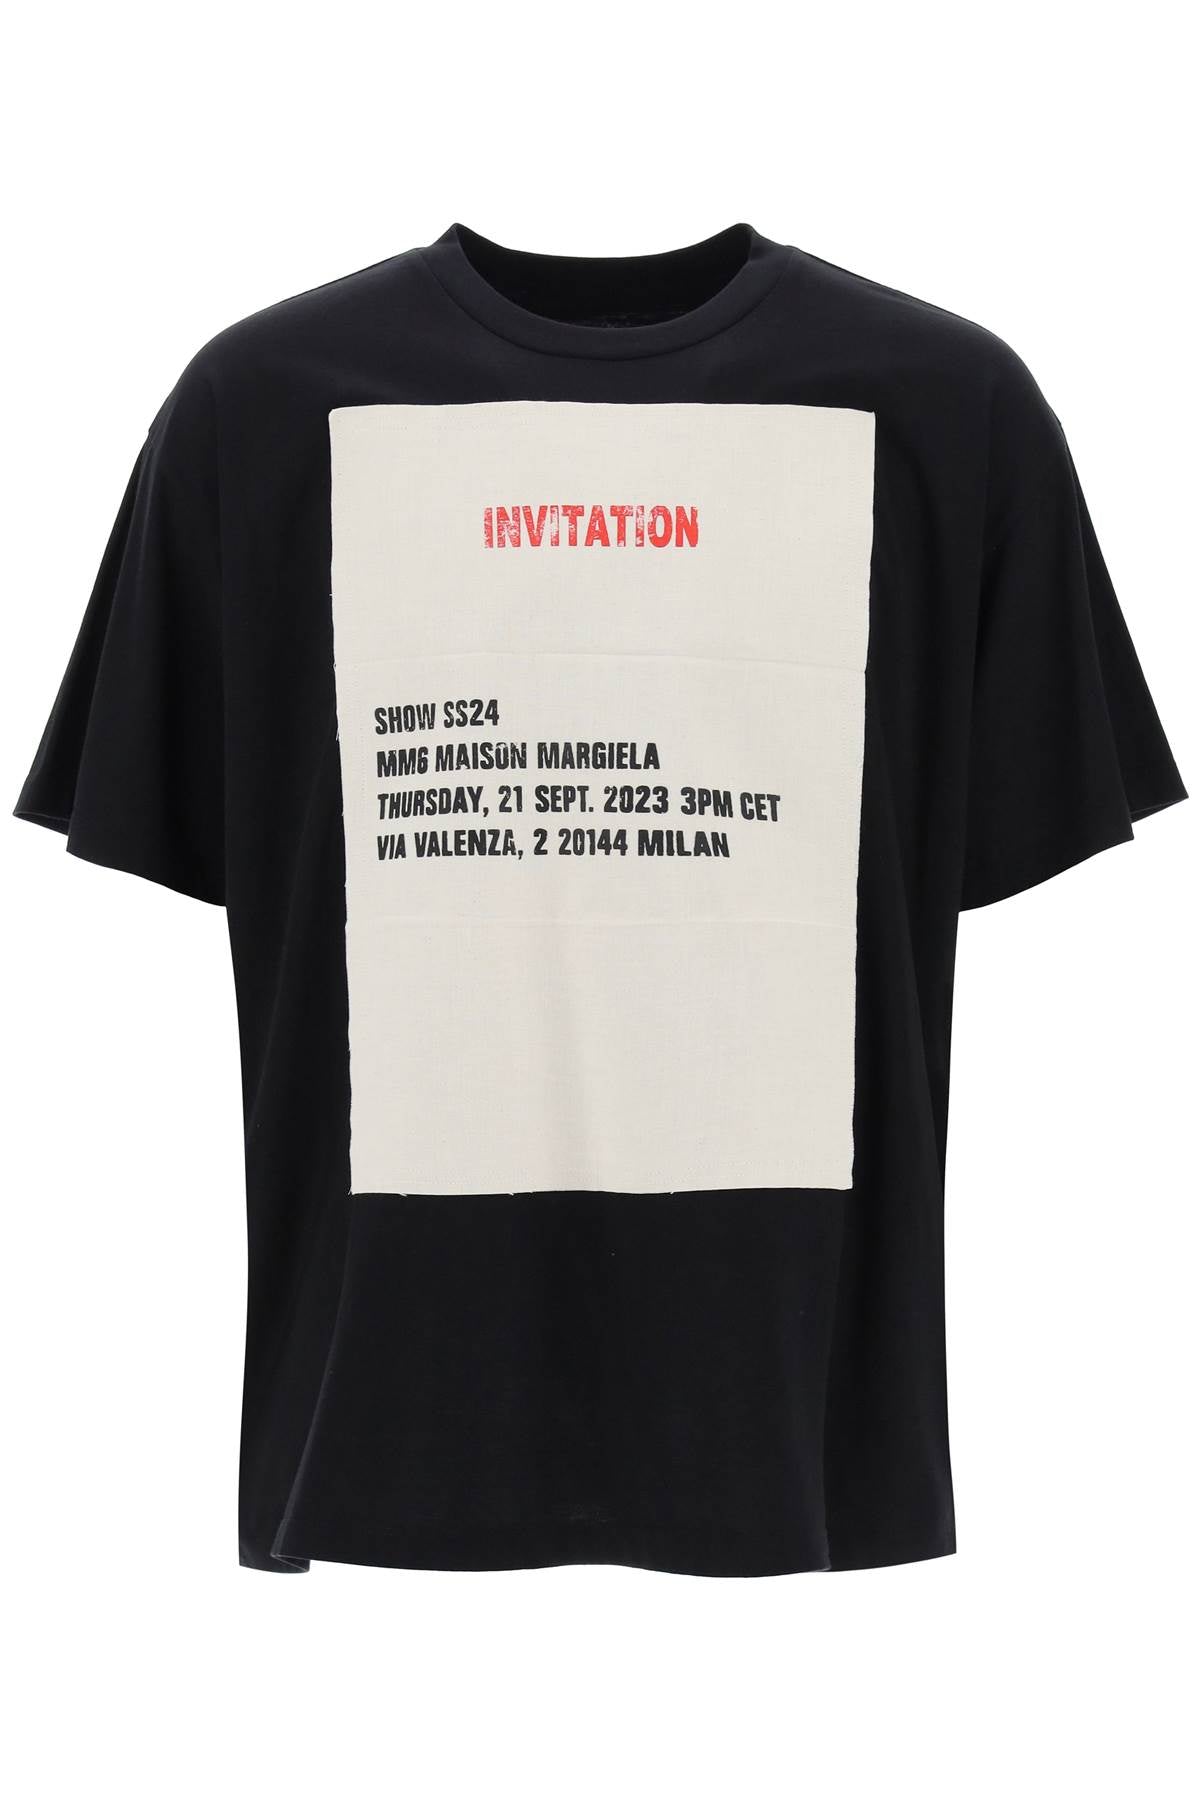 MM6 Maison Margiela invitation print t-shirt with SH2GC0006S23588900